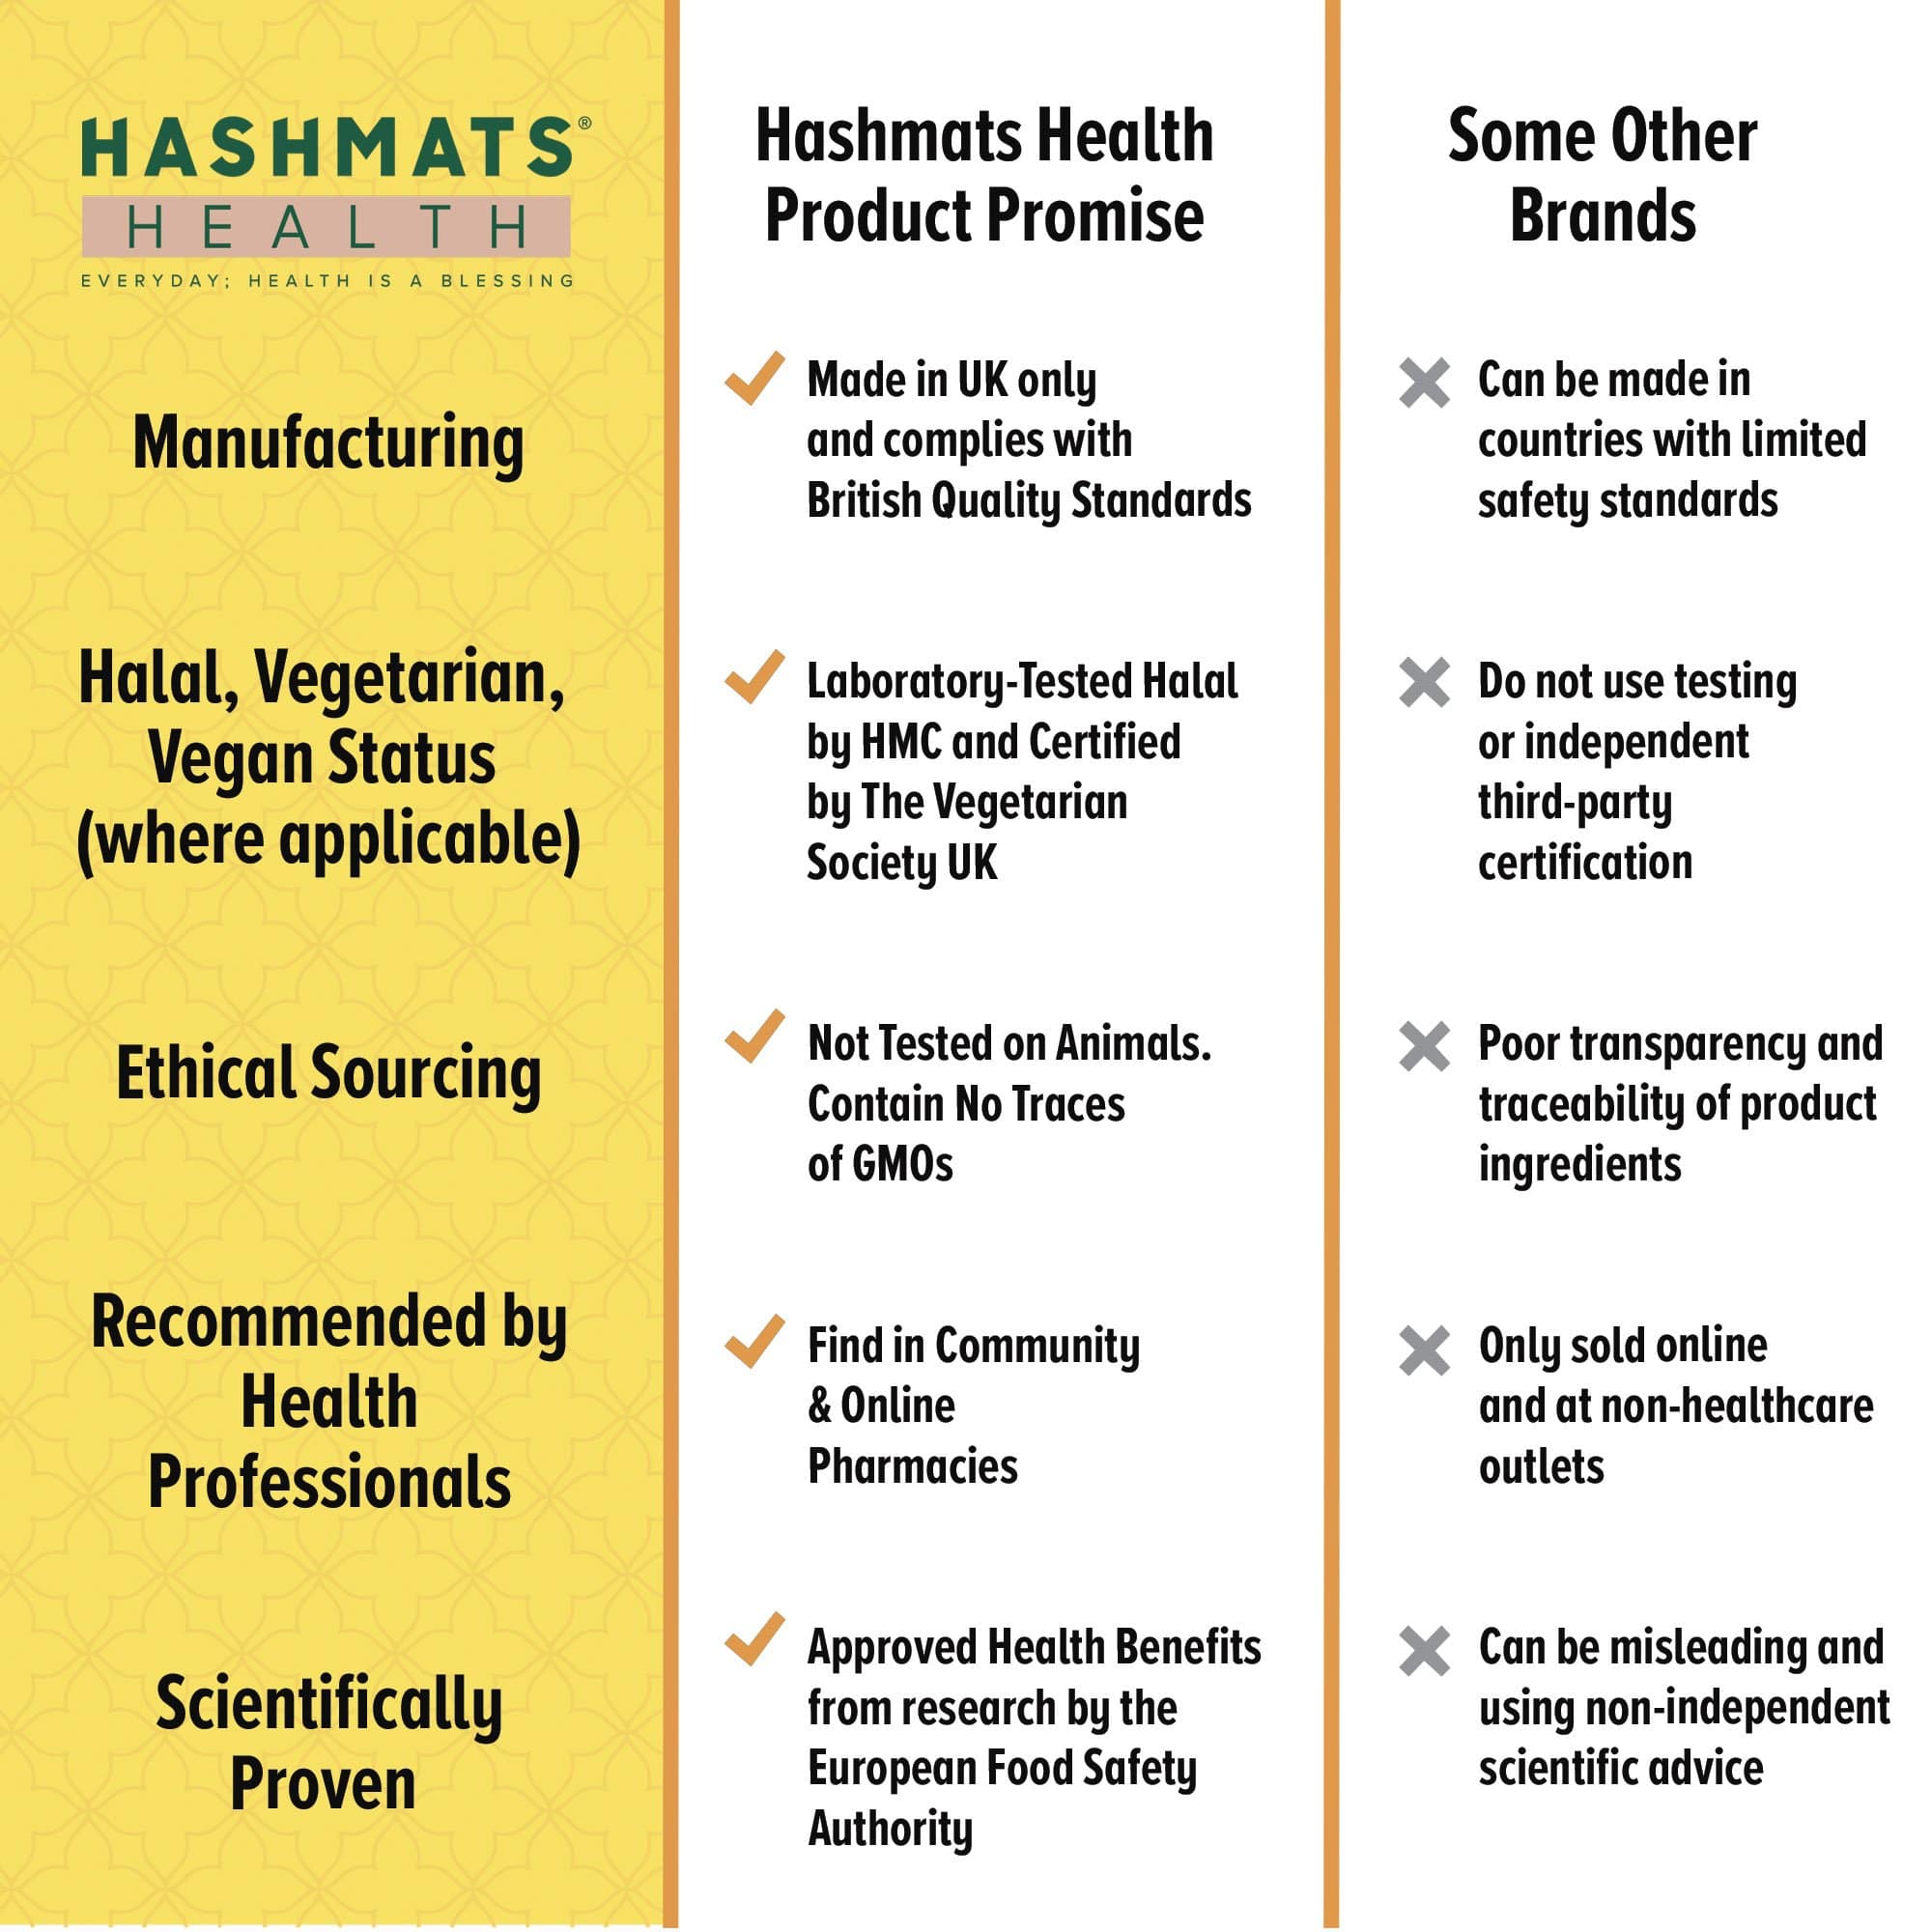 halal vitamins Daily Vitamin D3 1-Year Supply - Hashmats Health